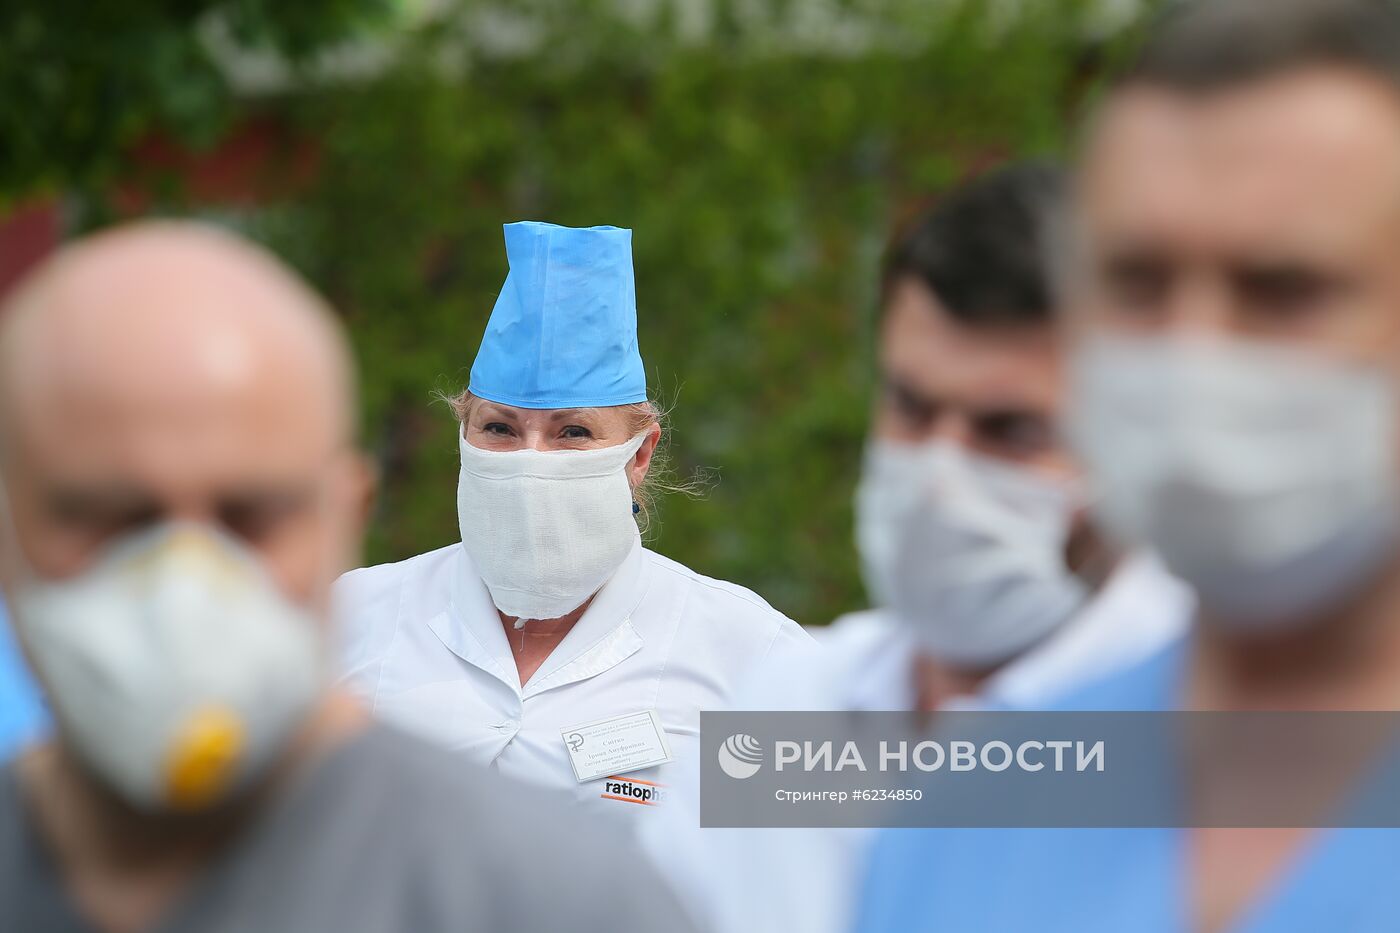 Акция протеста врачей в Киеве